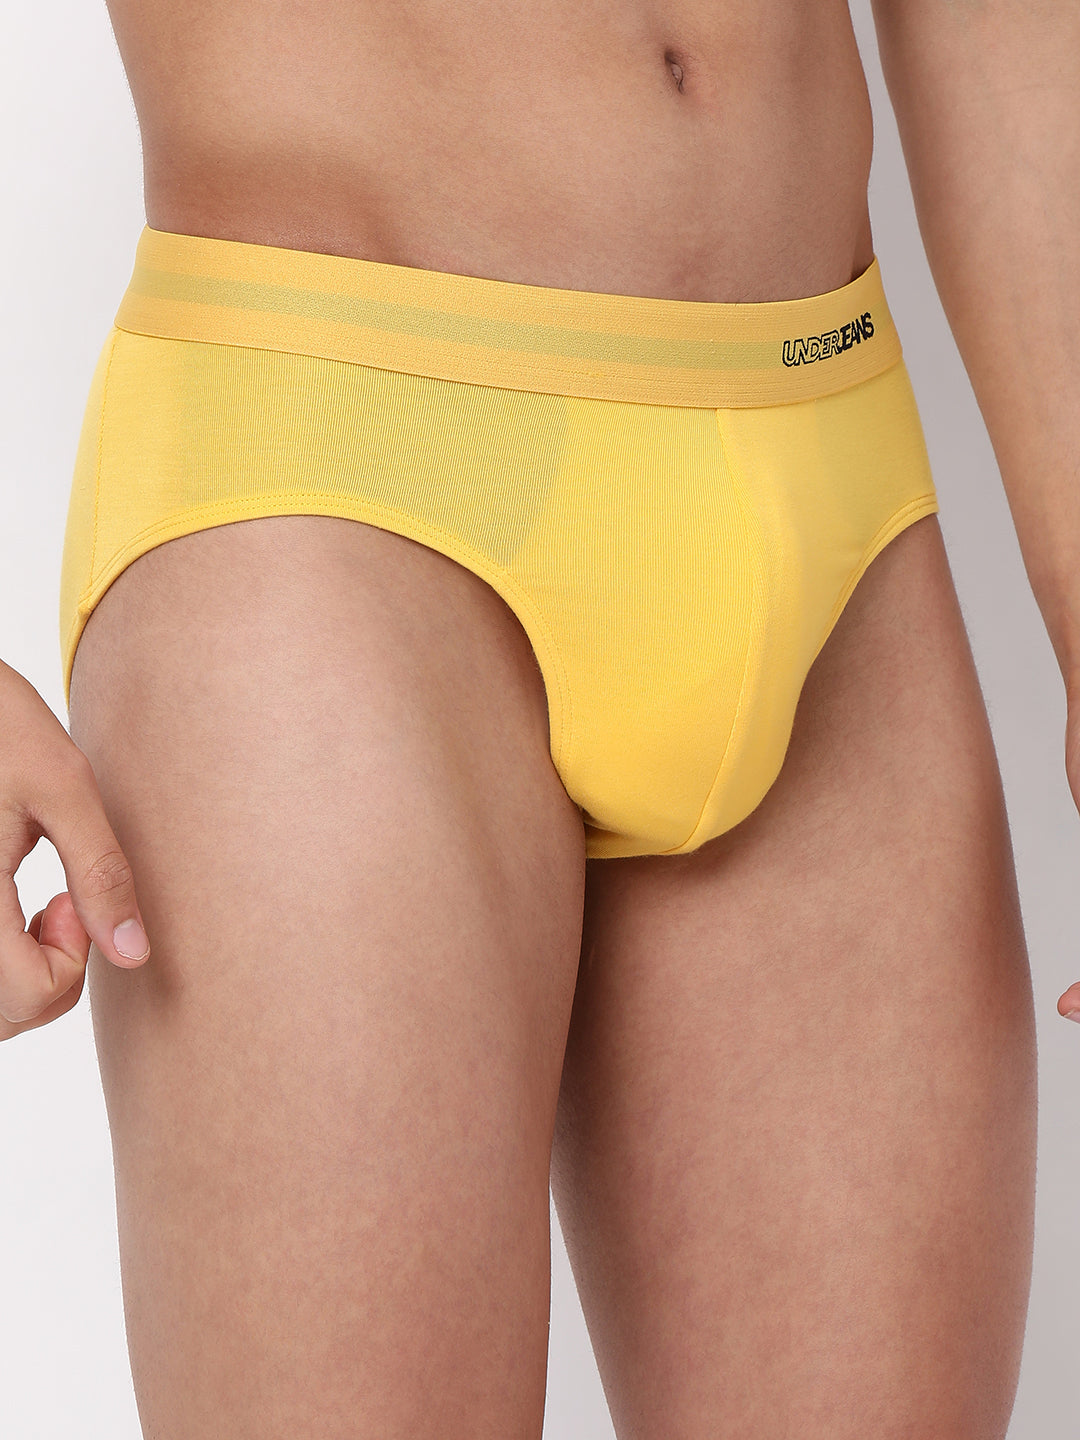 Men Premium Micromodal Yellow Brief - UnderJeans by Spykar